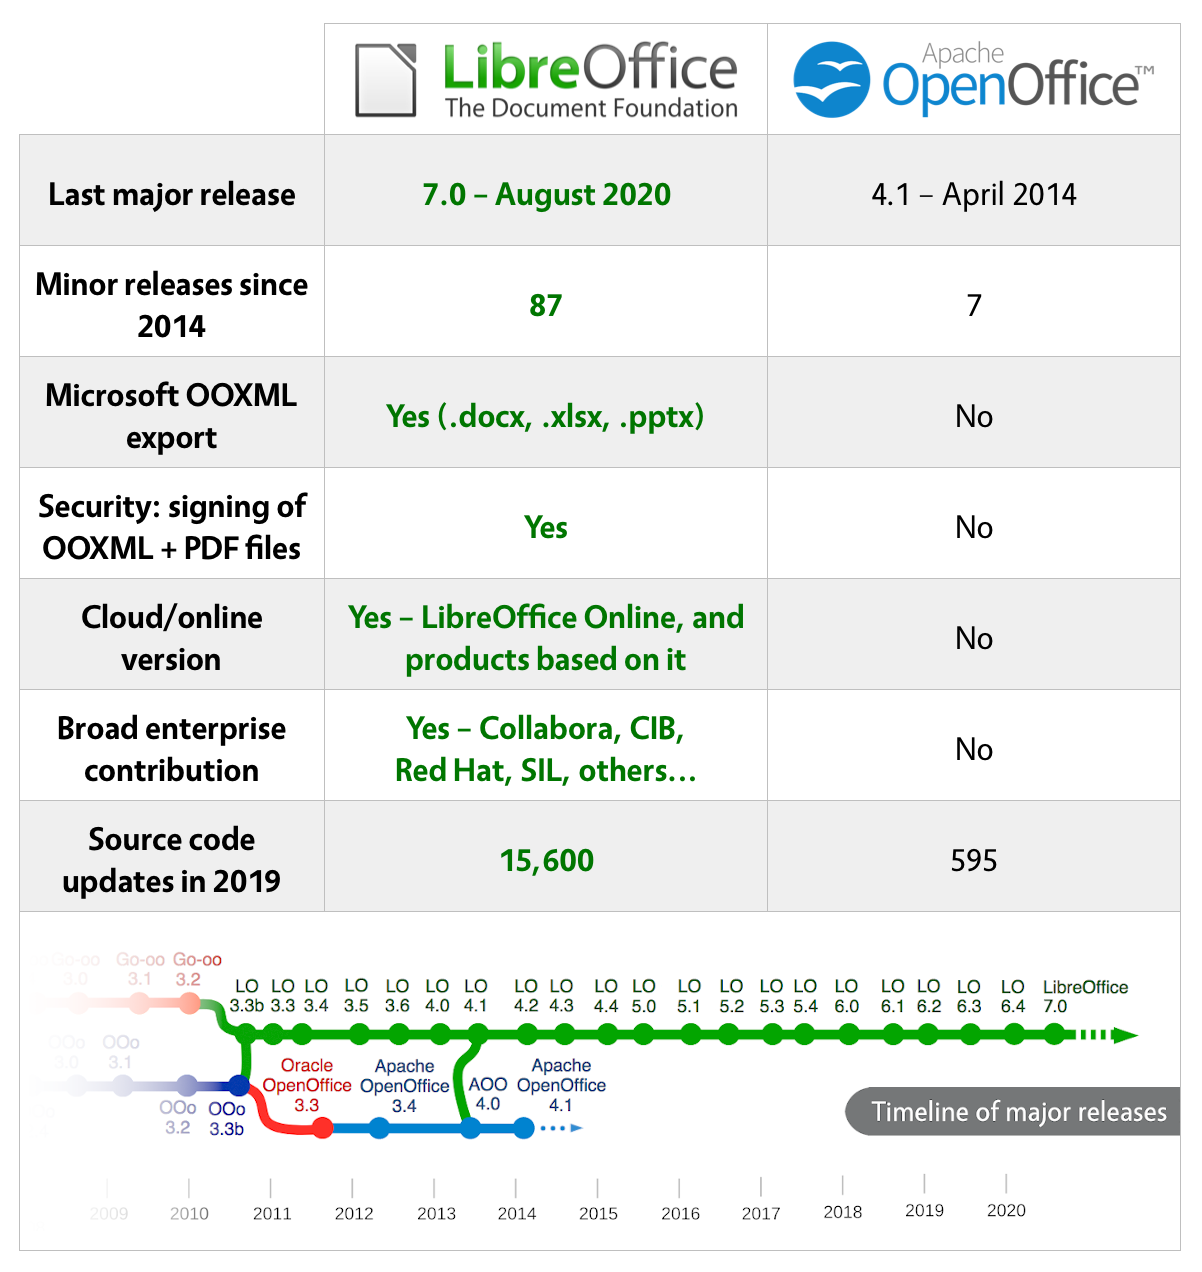 openoffice vs libreoffice 2015 pdf forms